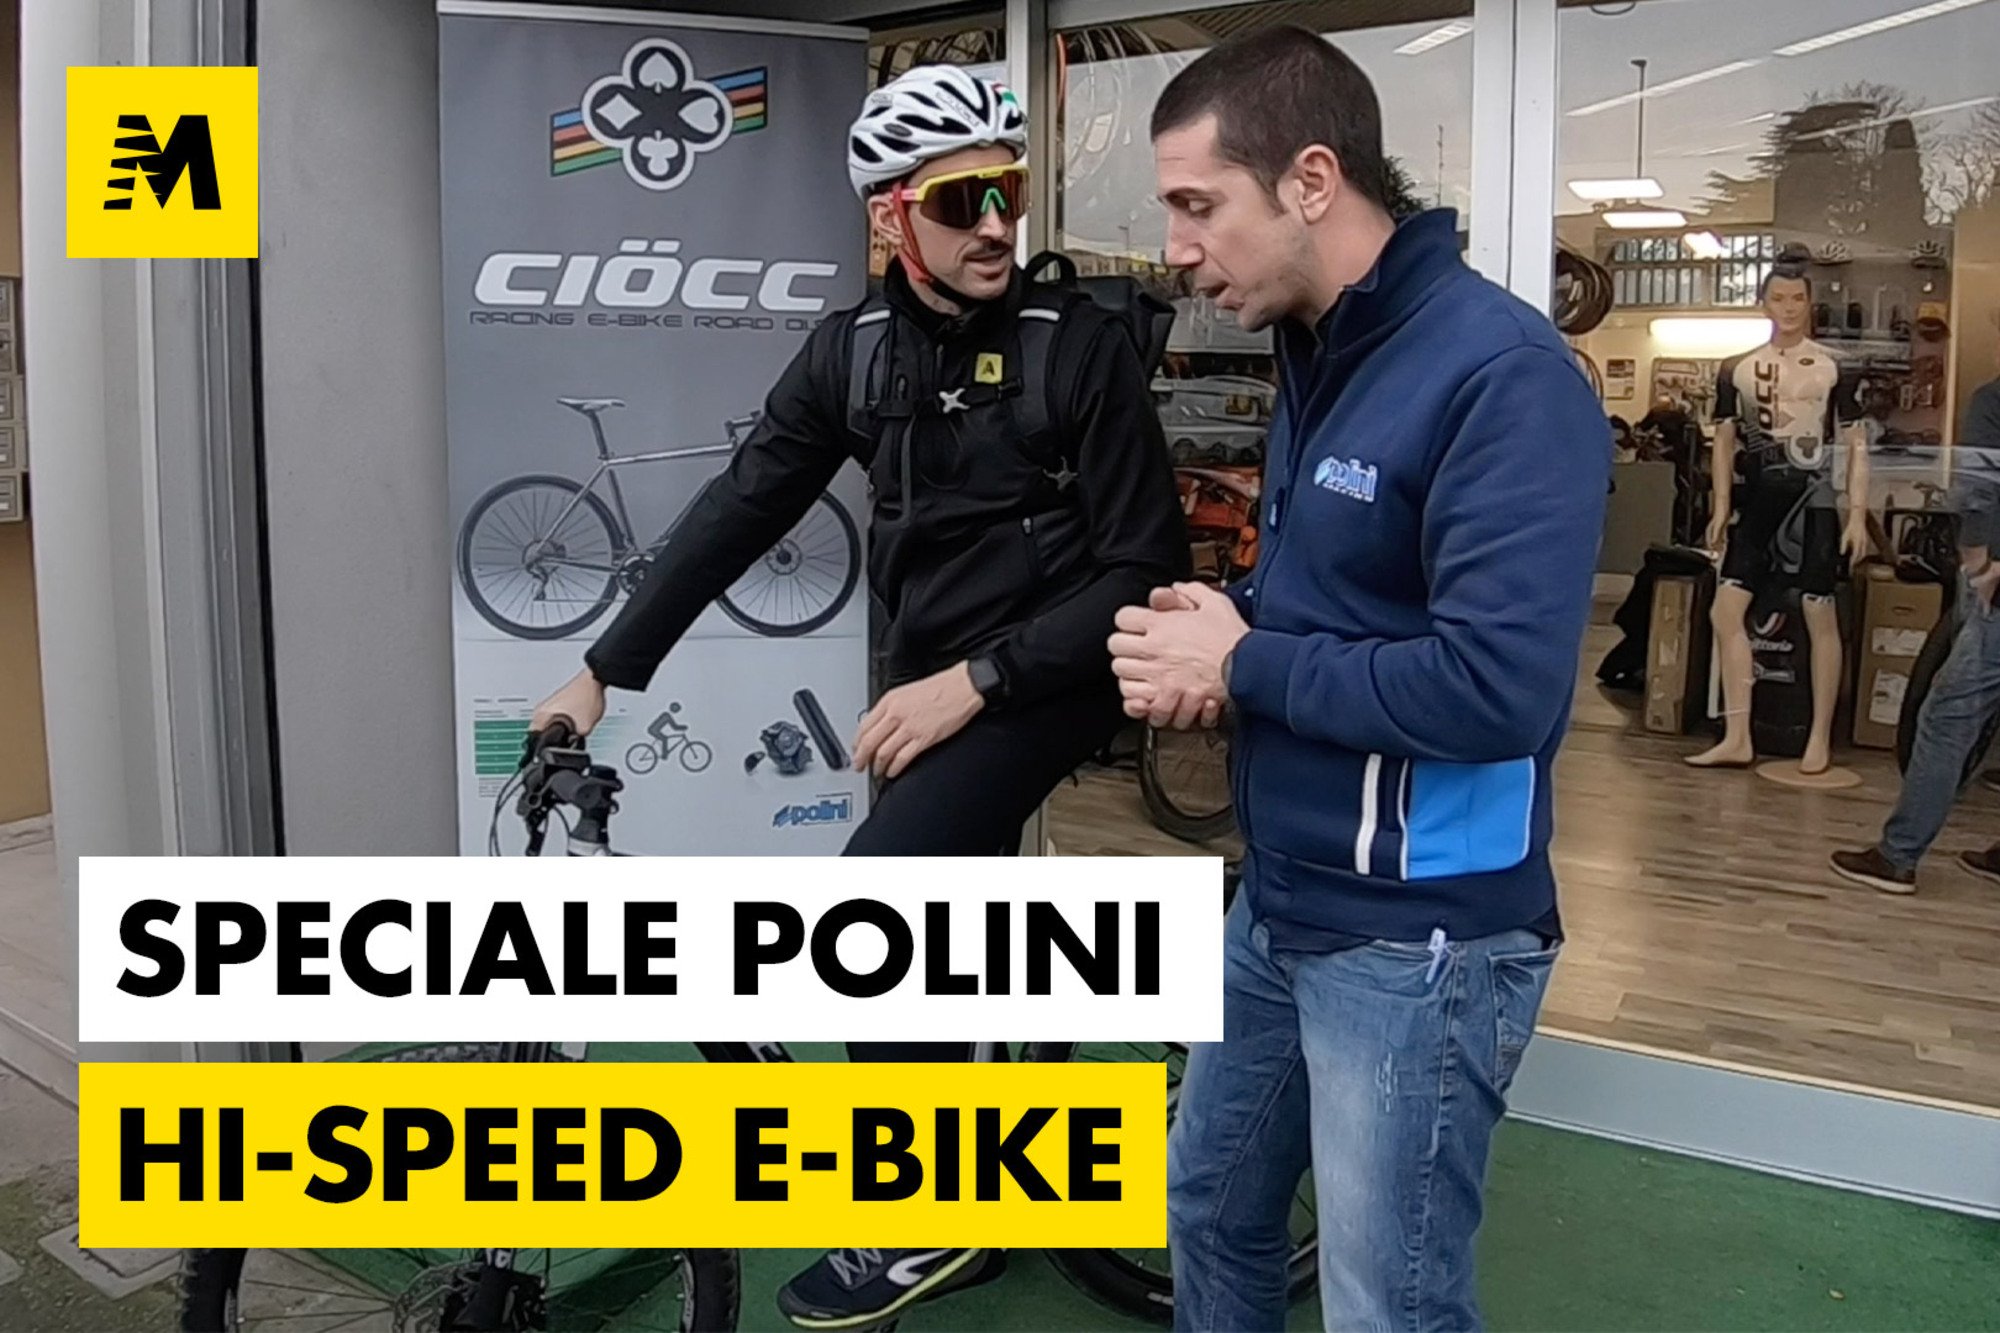 Polini Hi-Speed per e-bike. Massime prestazioni in pochi secondi